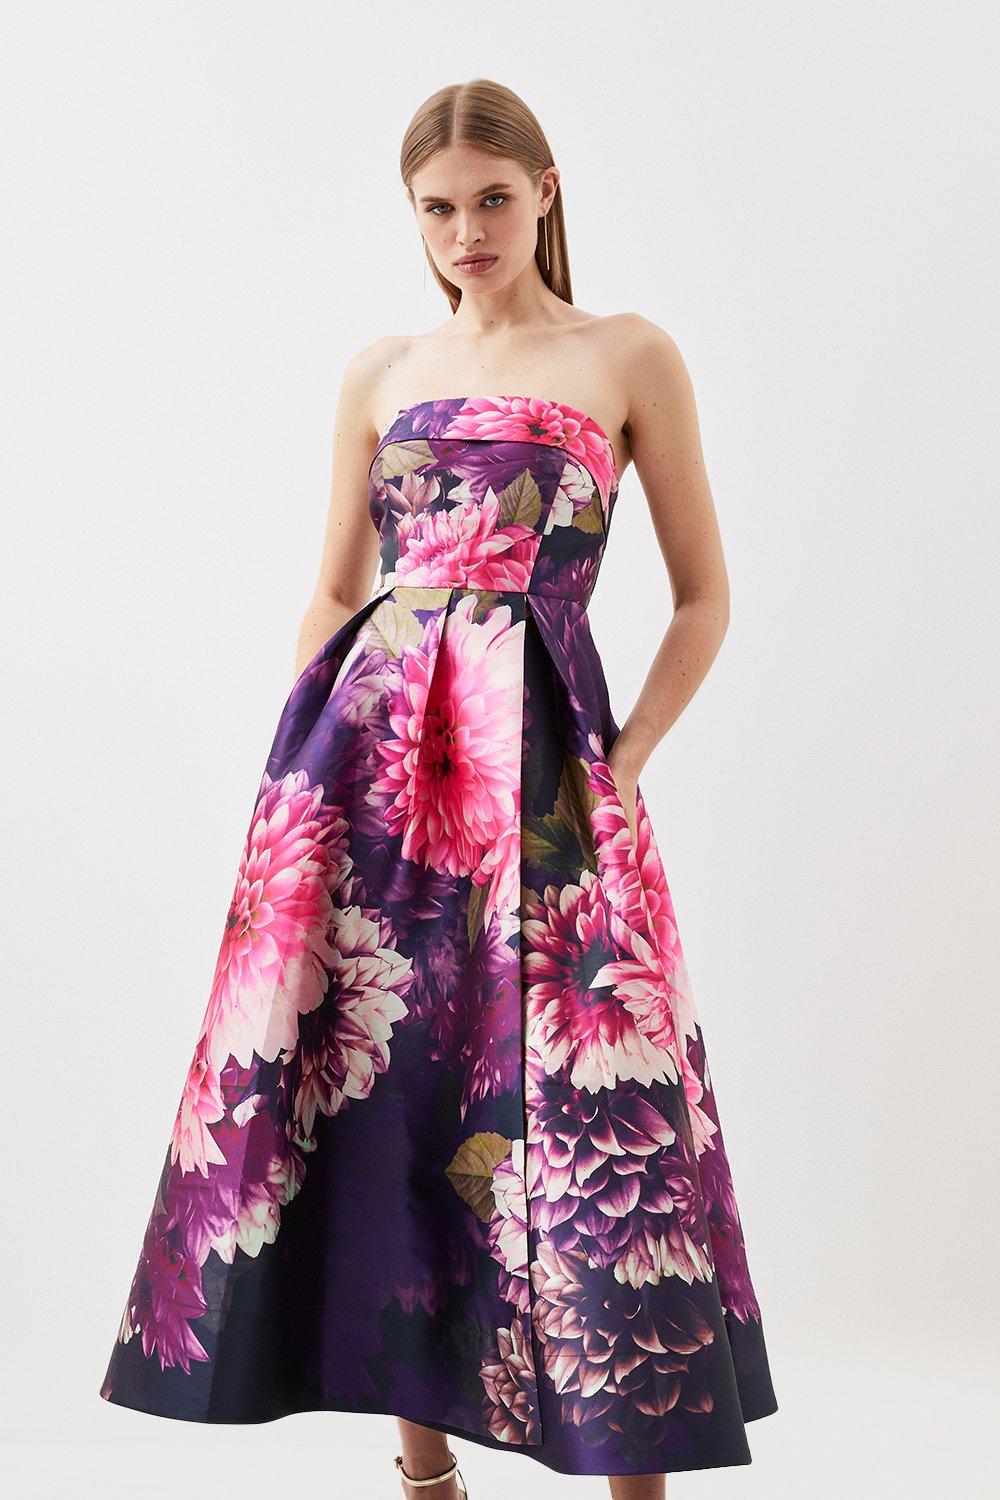 Dress Exploding Split Midaxi Karen | Millen Front Prom Floral